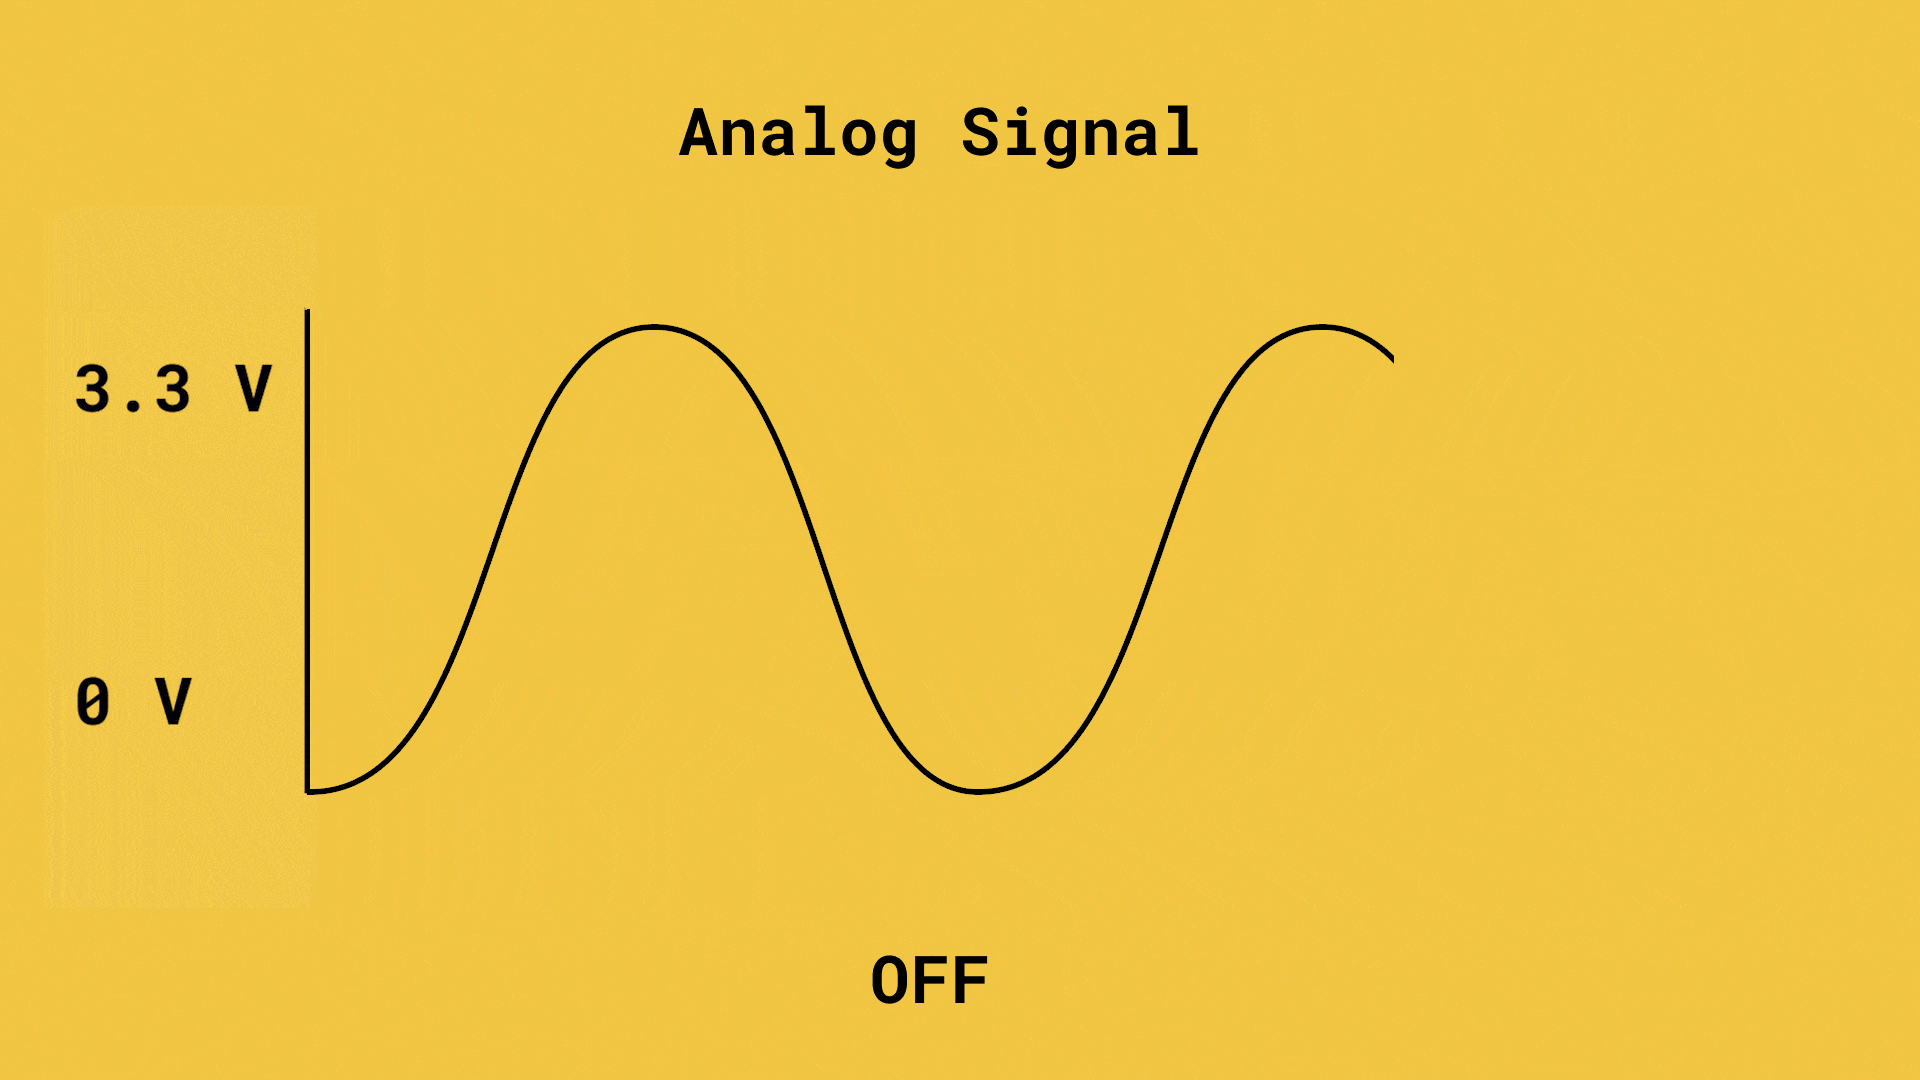 Analog signals.